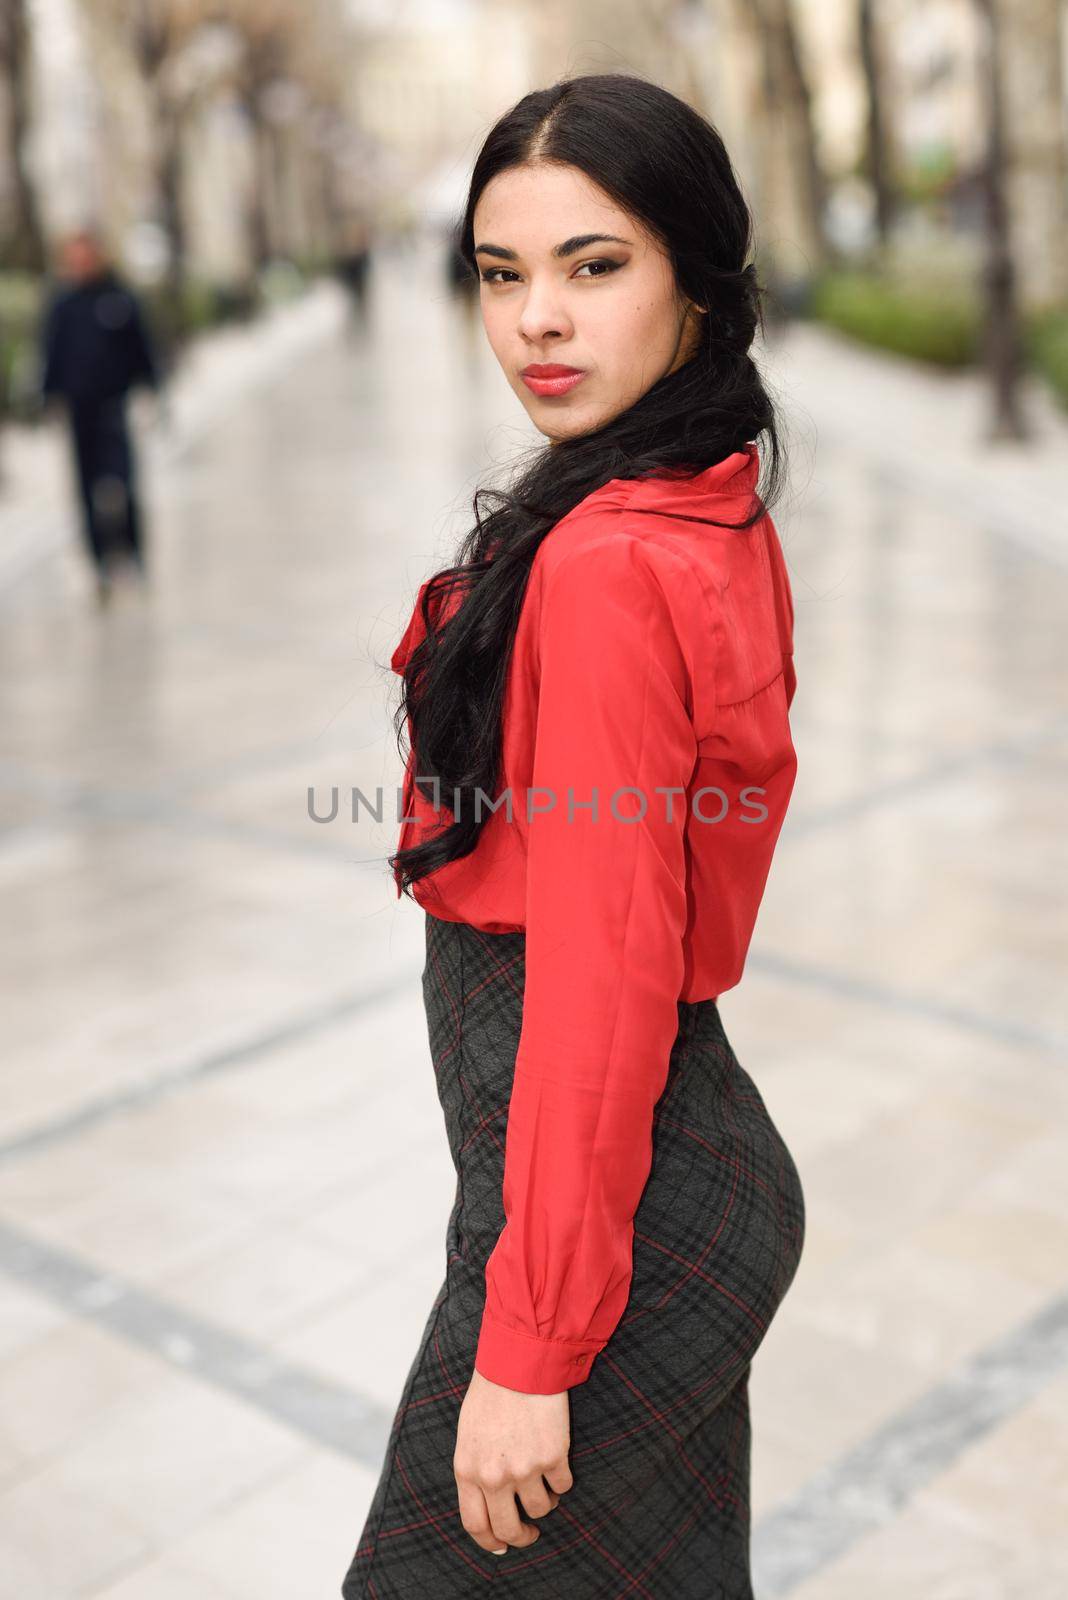 Hispanic stewardess in urban background by javiindy